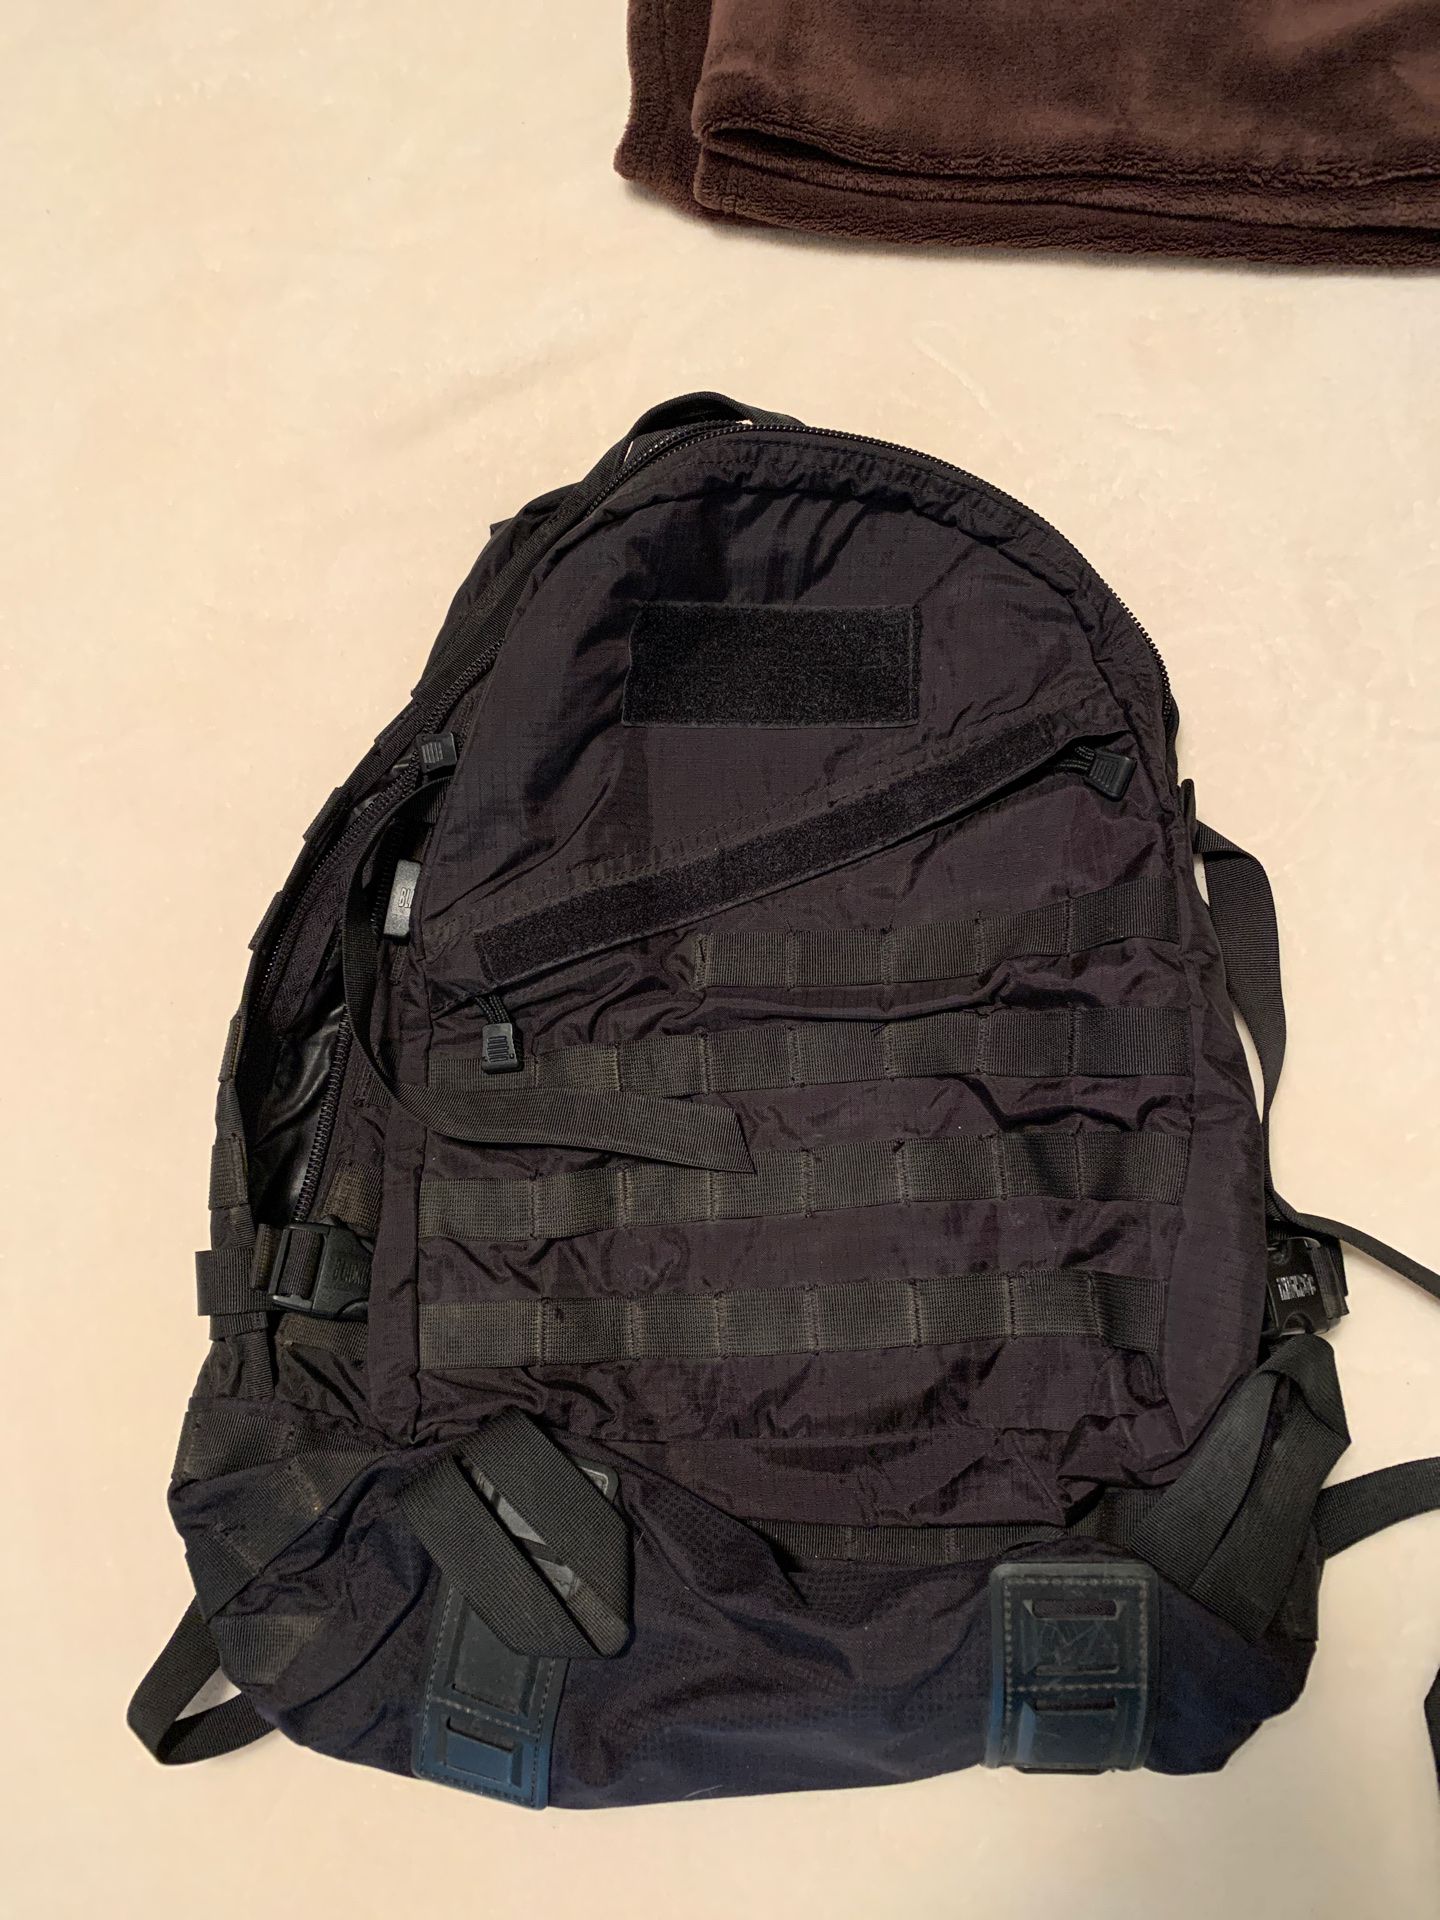 Blackhawk brand ripstop backpack